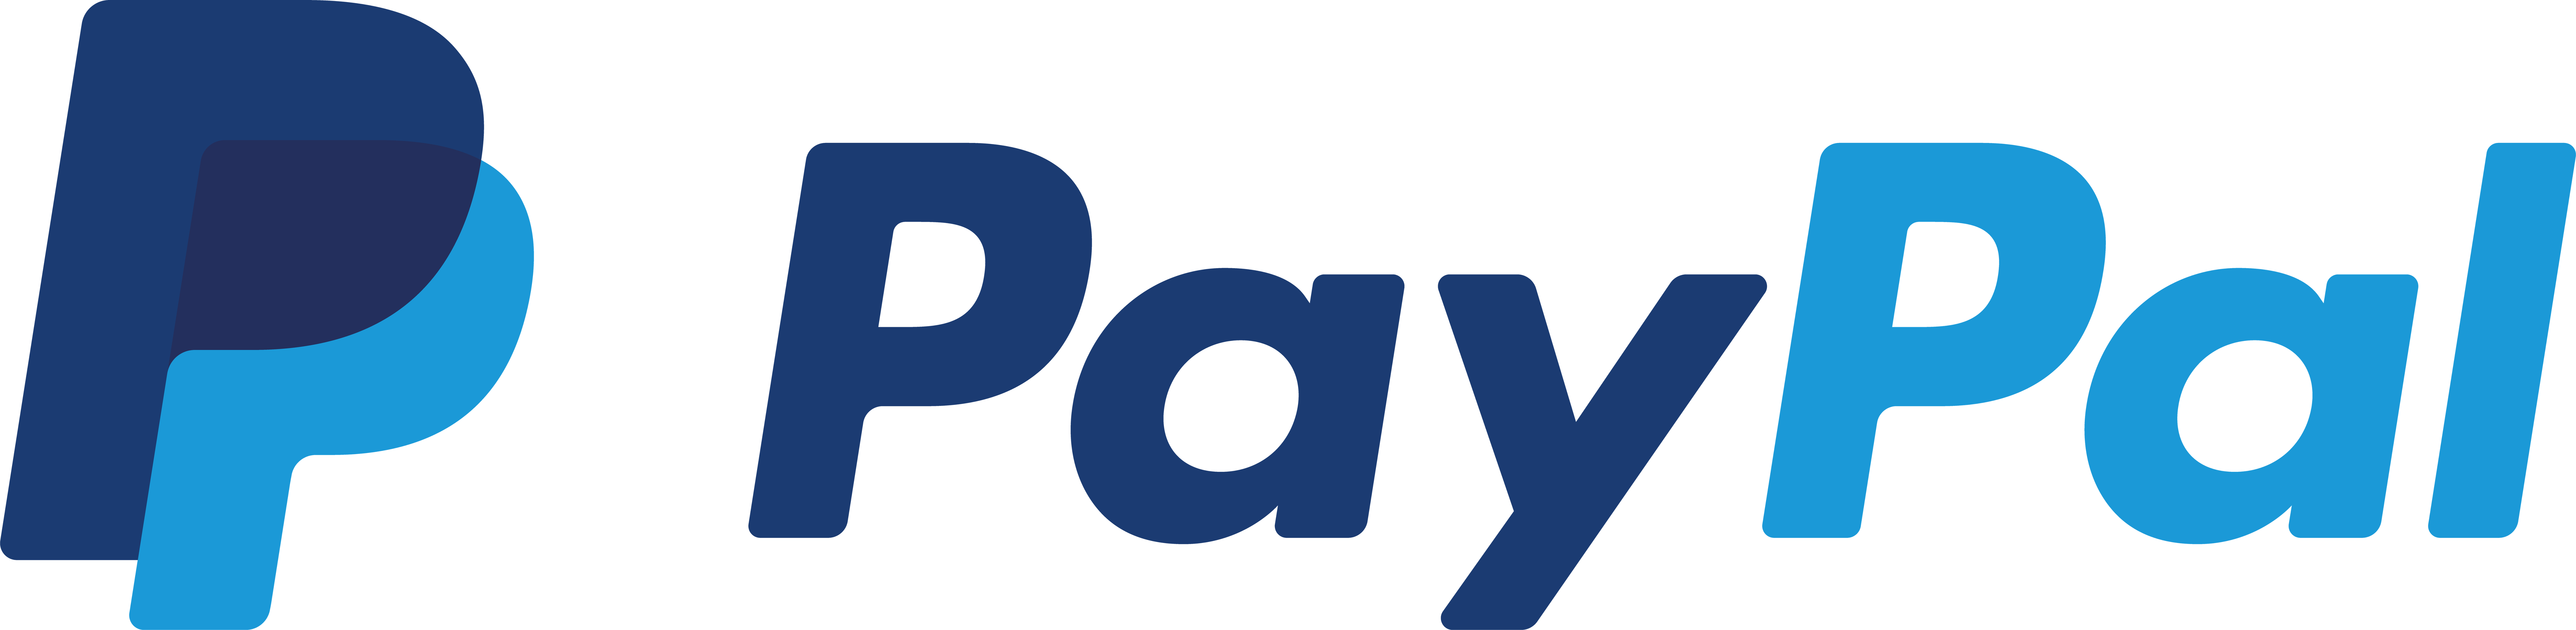 PayPal_com.png